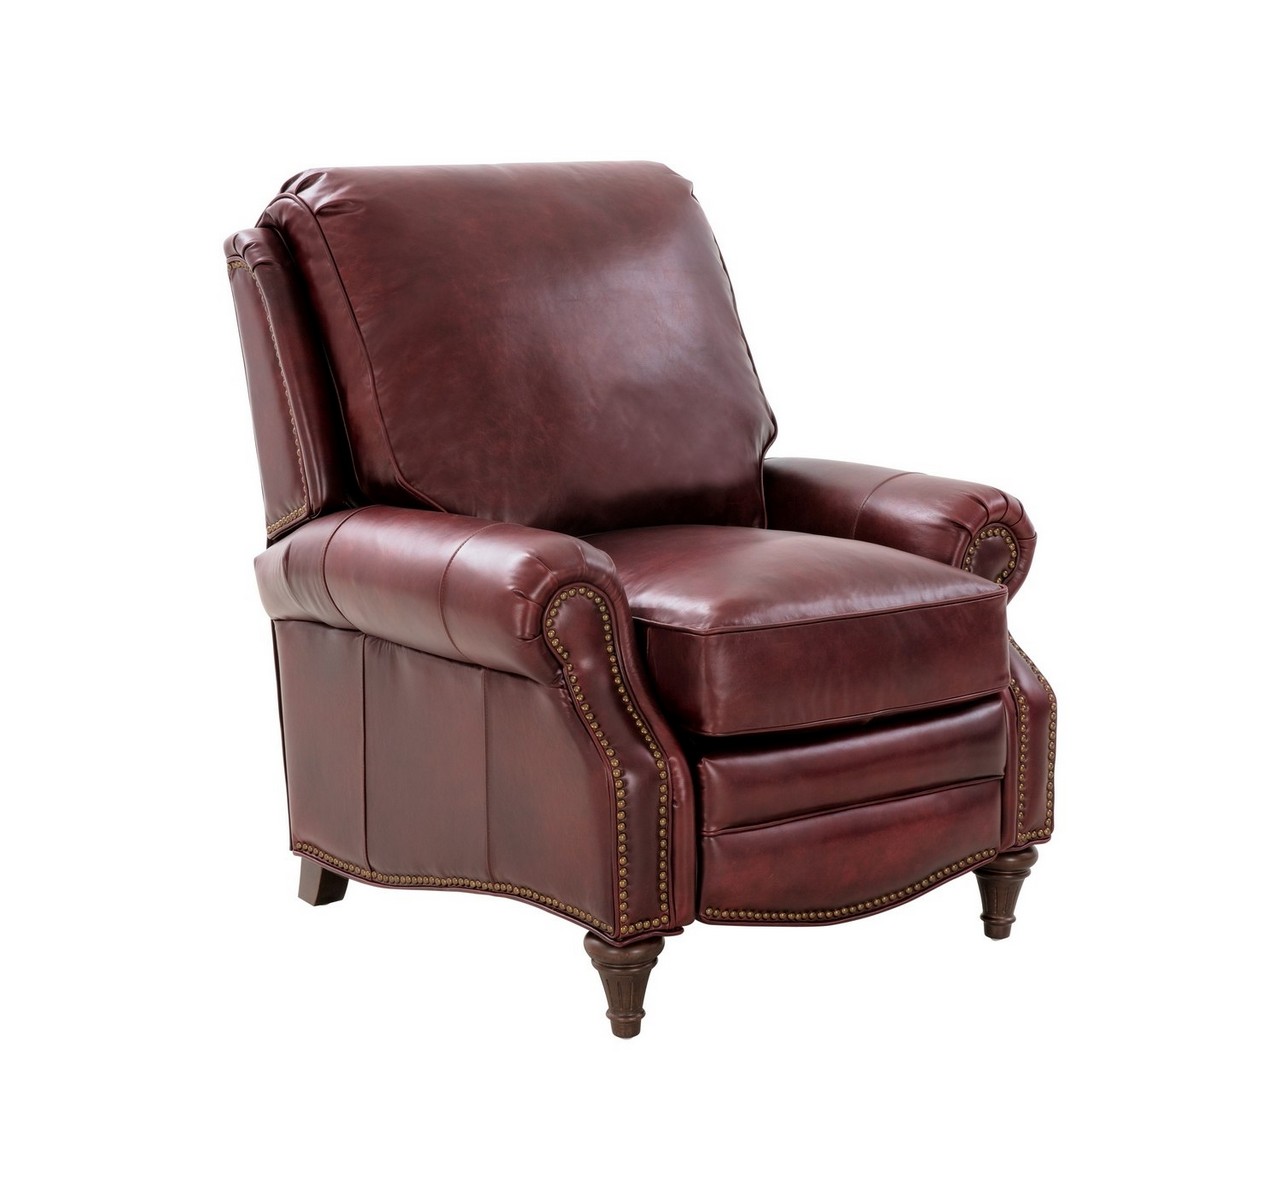 Barcalounger Avery Recliner Chair - Emerson Sangria/Top Grain Leather